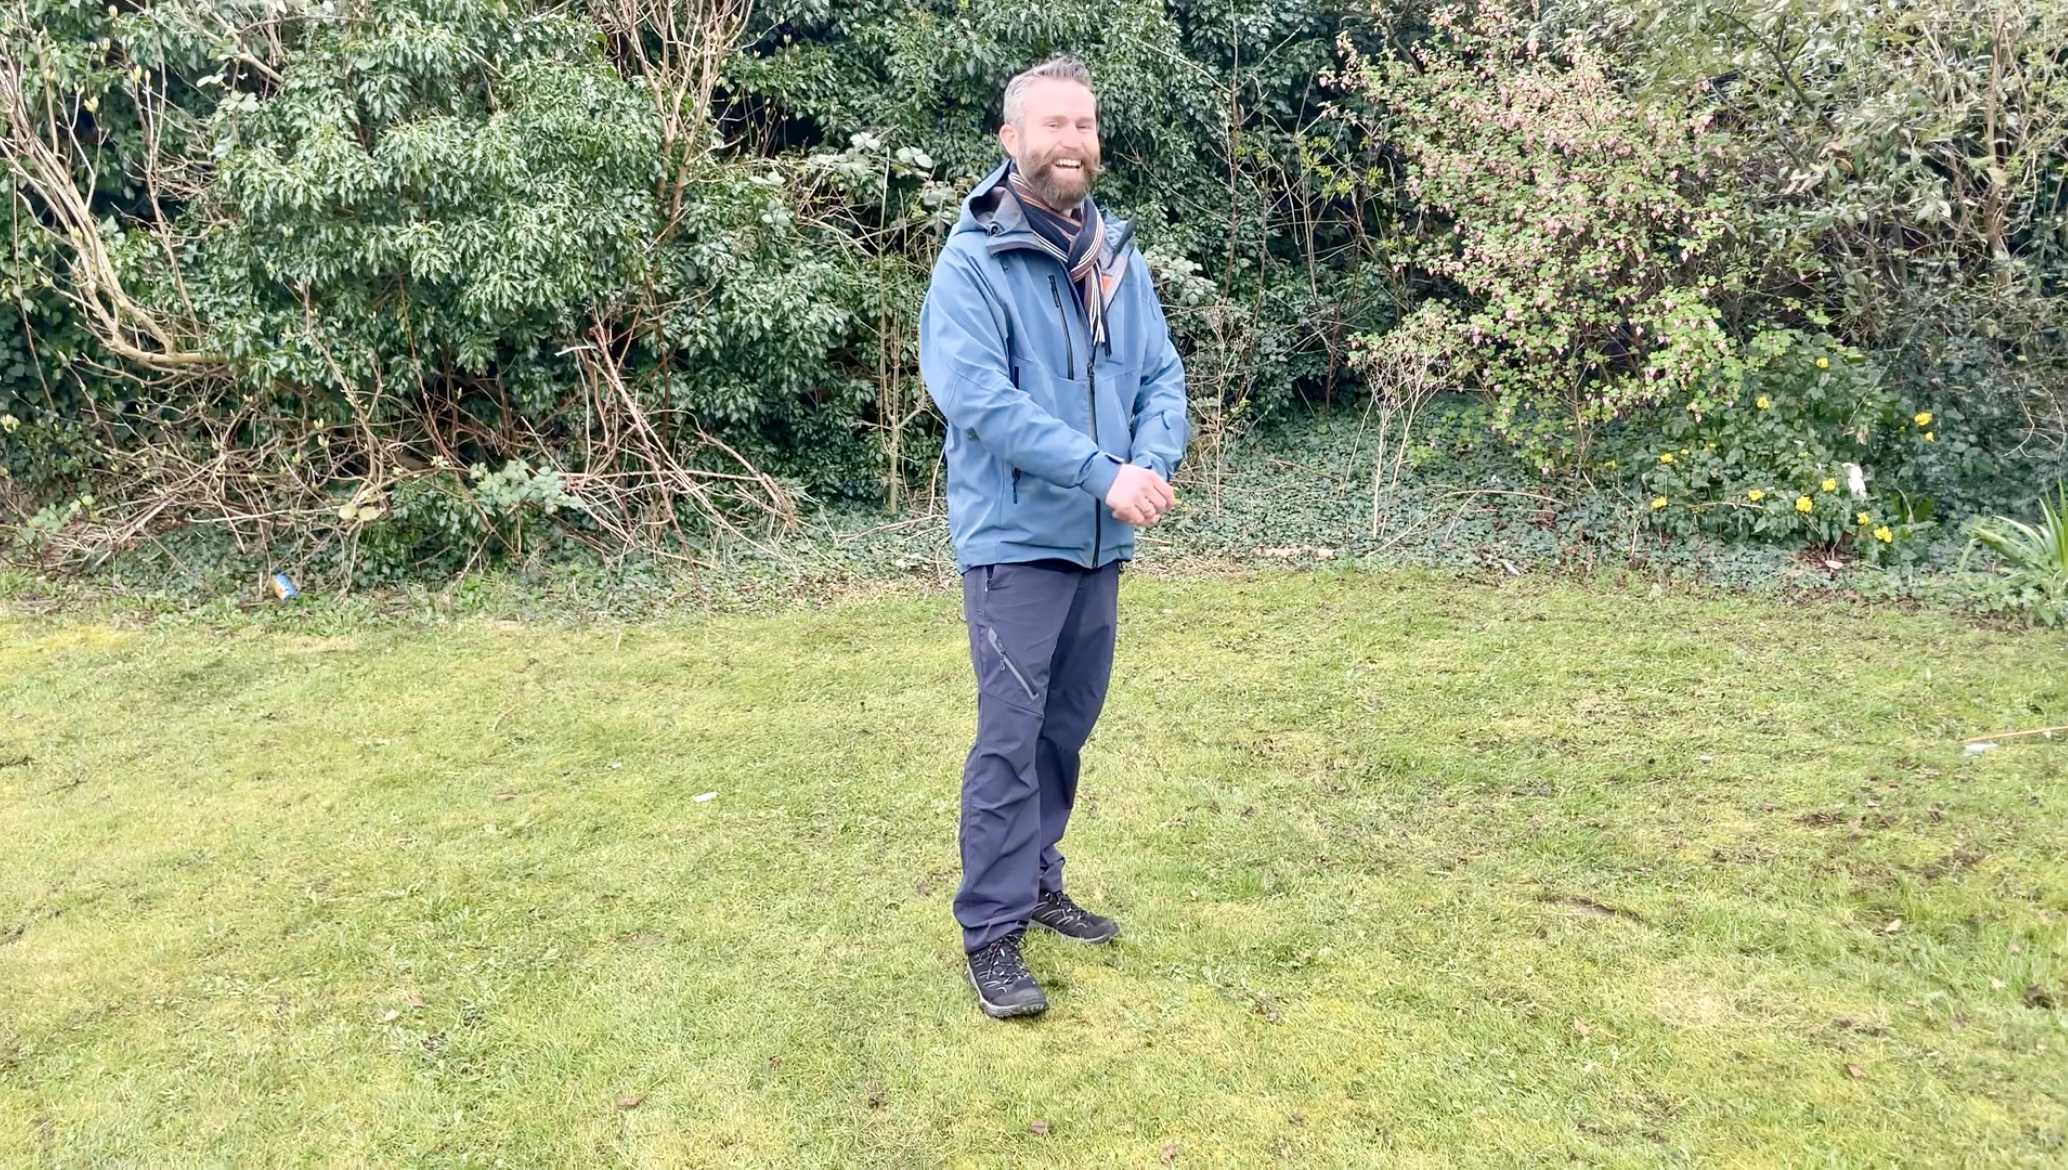 Simon, walking case study in green space